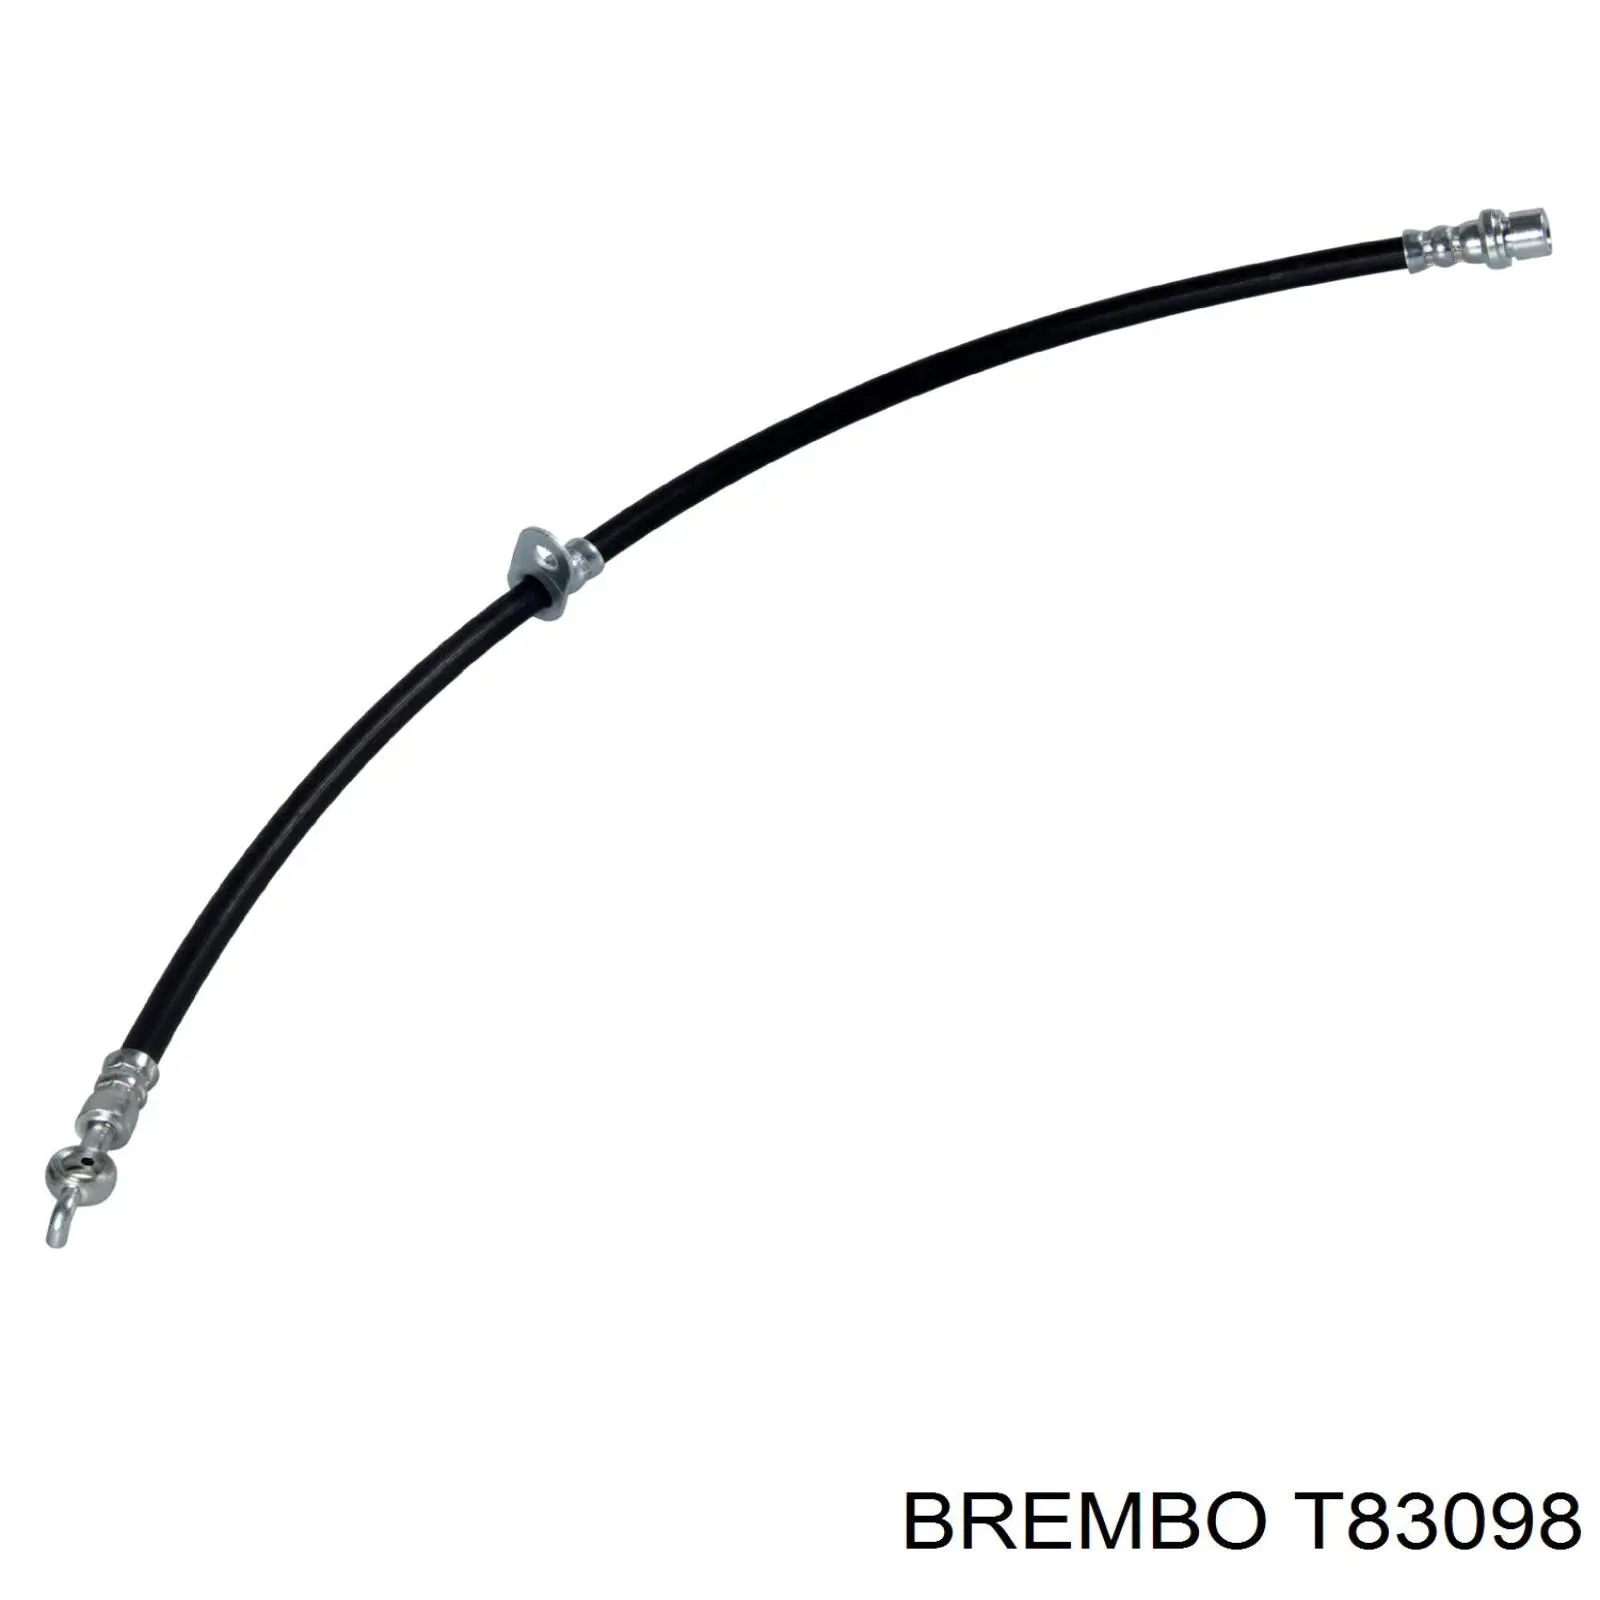 T83098 Brembo шланг тормозной задний правый